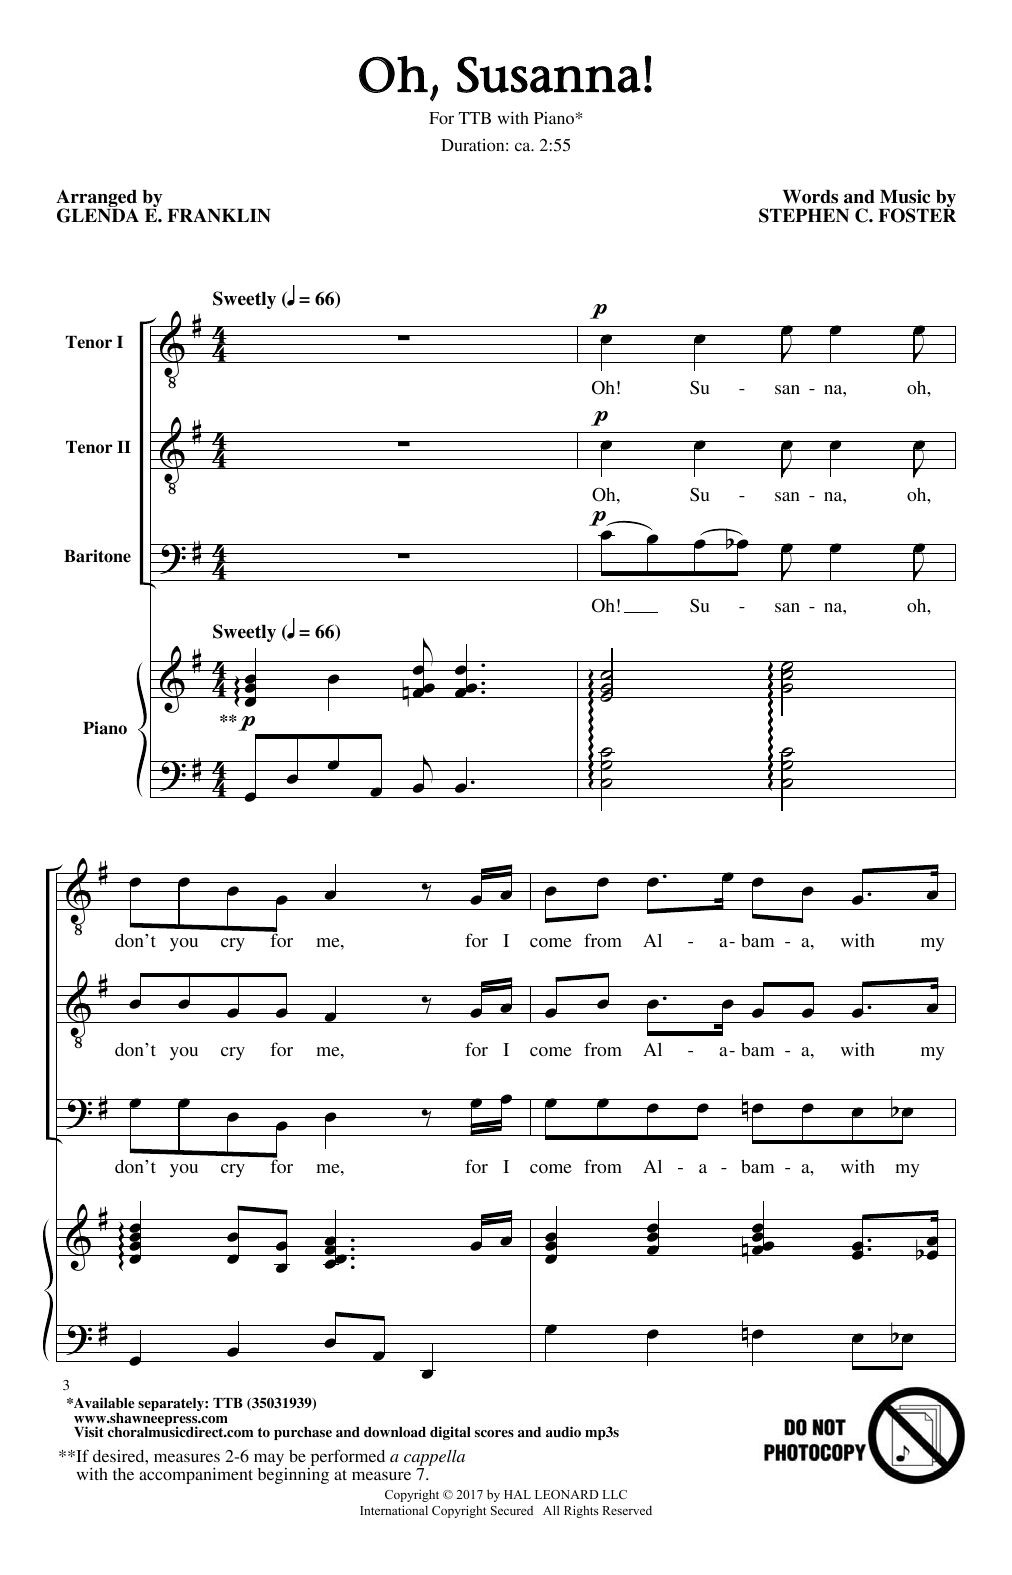 Glenda E. Franklin Oh, Susanna! Sheet Music Notes & Chords for TTBB - Download or Print PDF